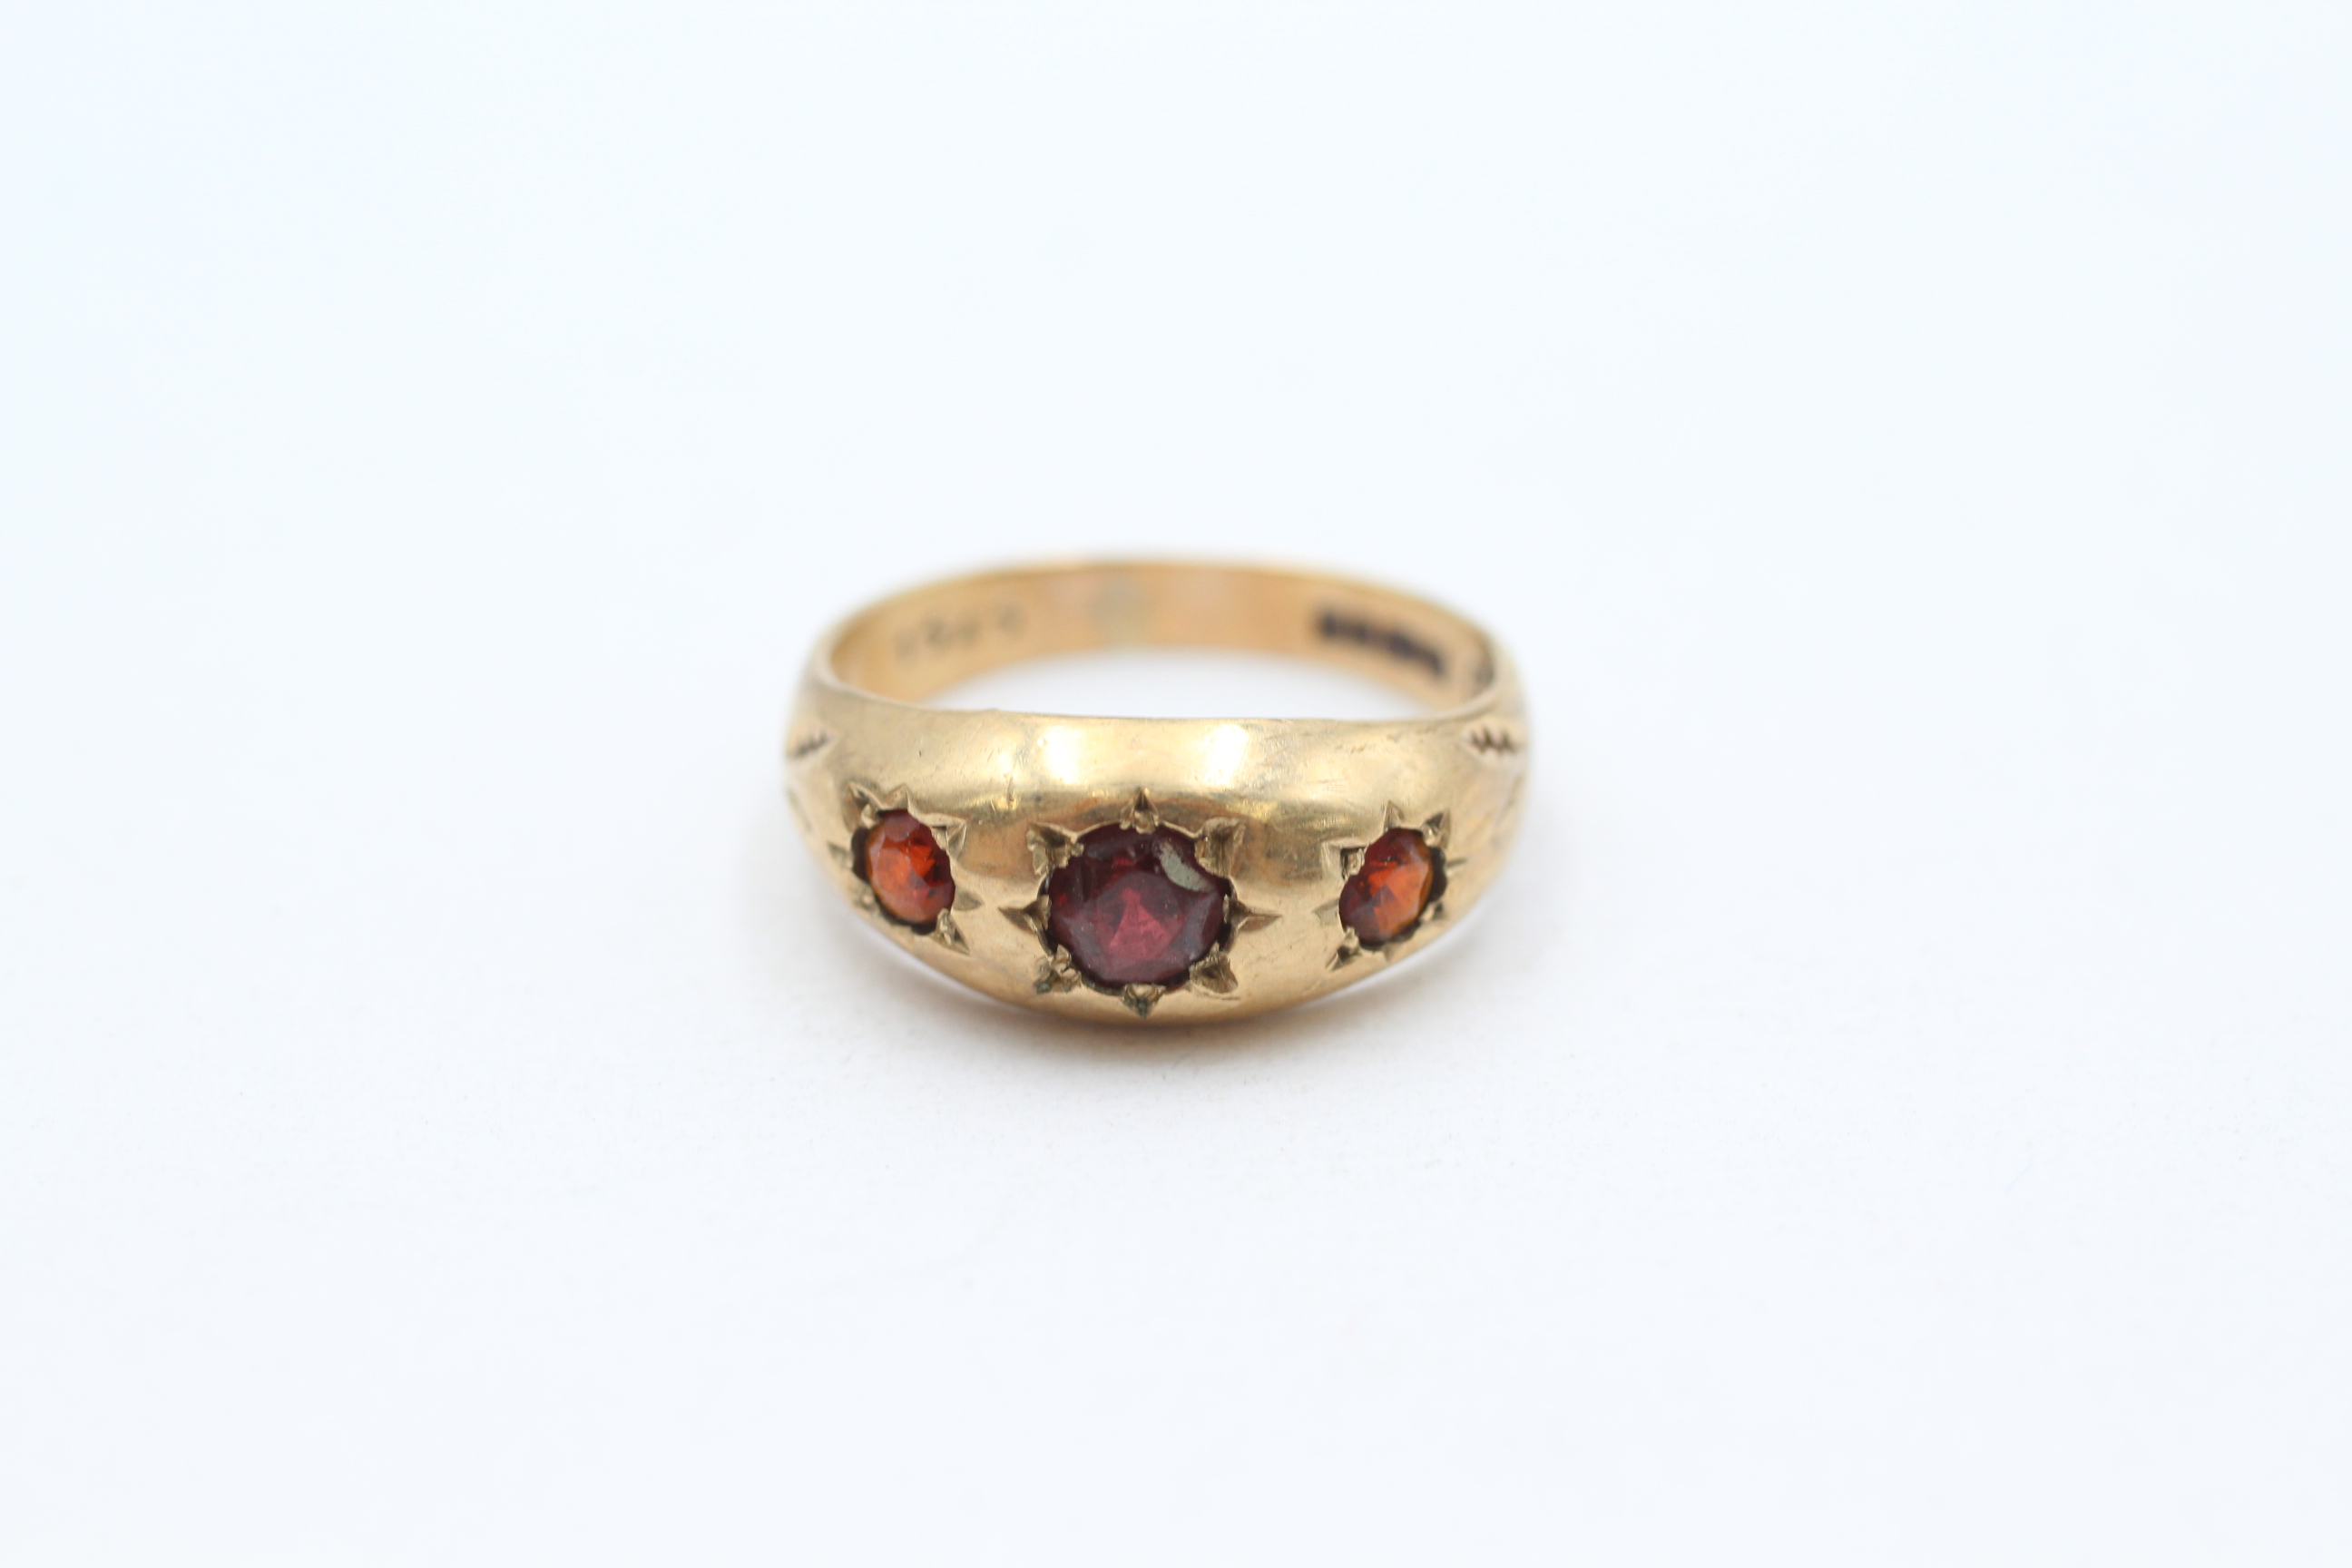 9ct gold antique garnet three stone ring with starburst motif Size M - 2.5 g